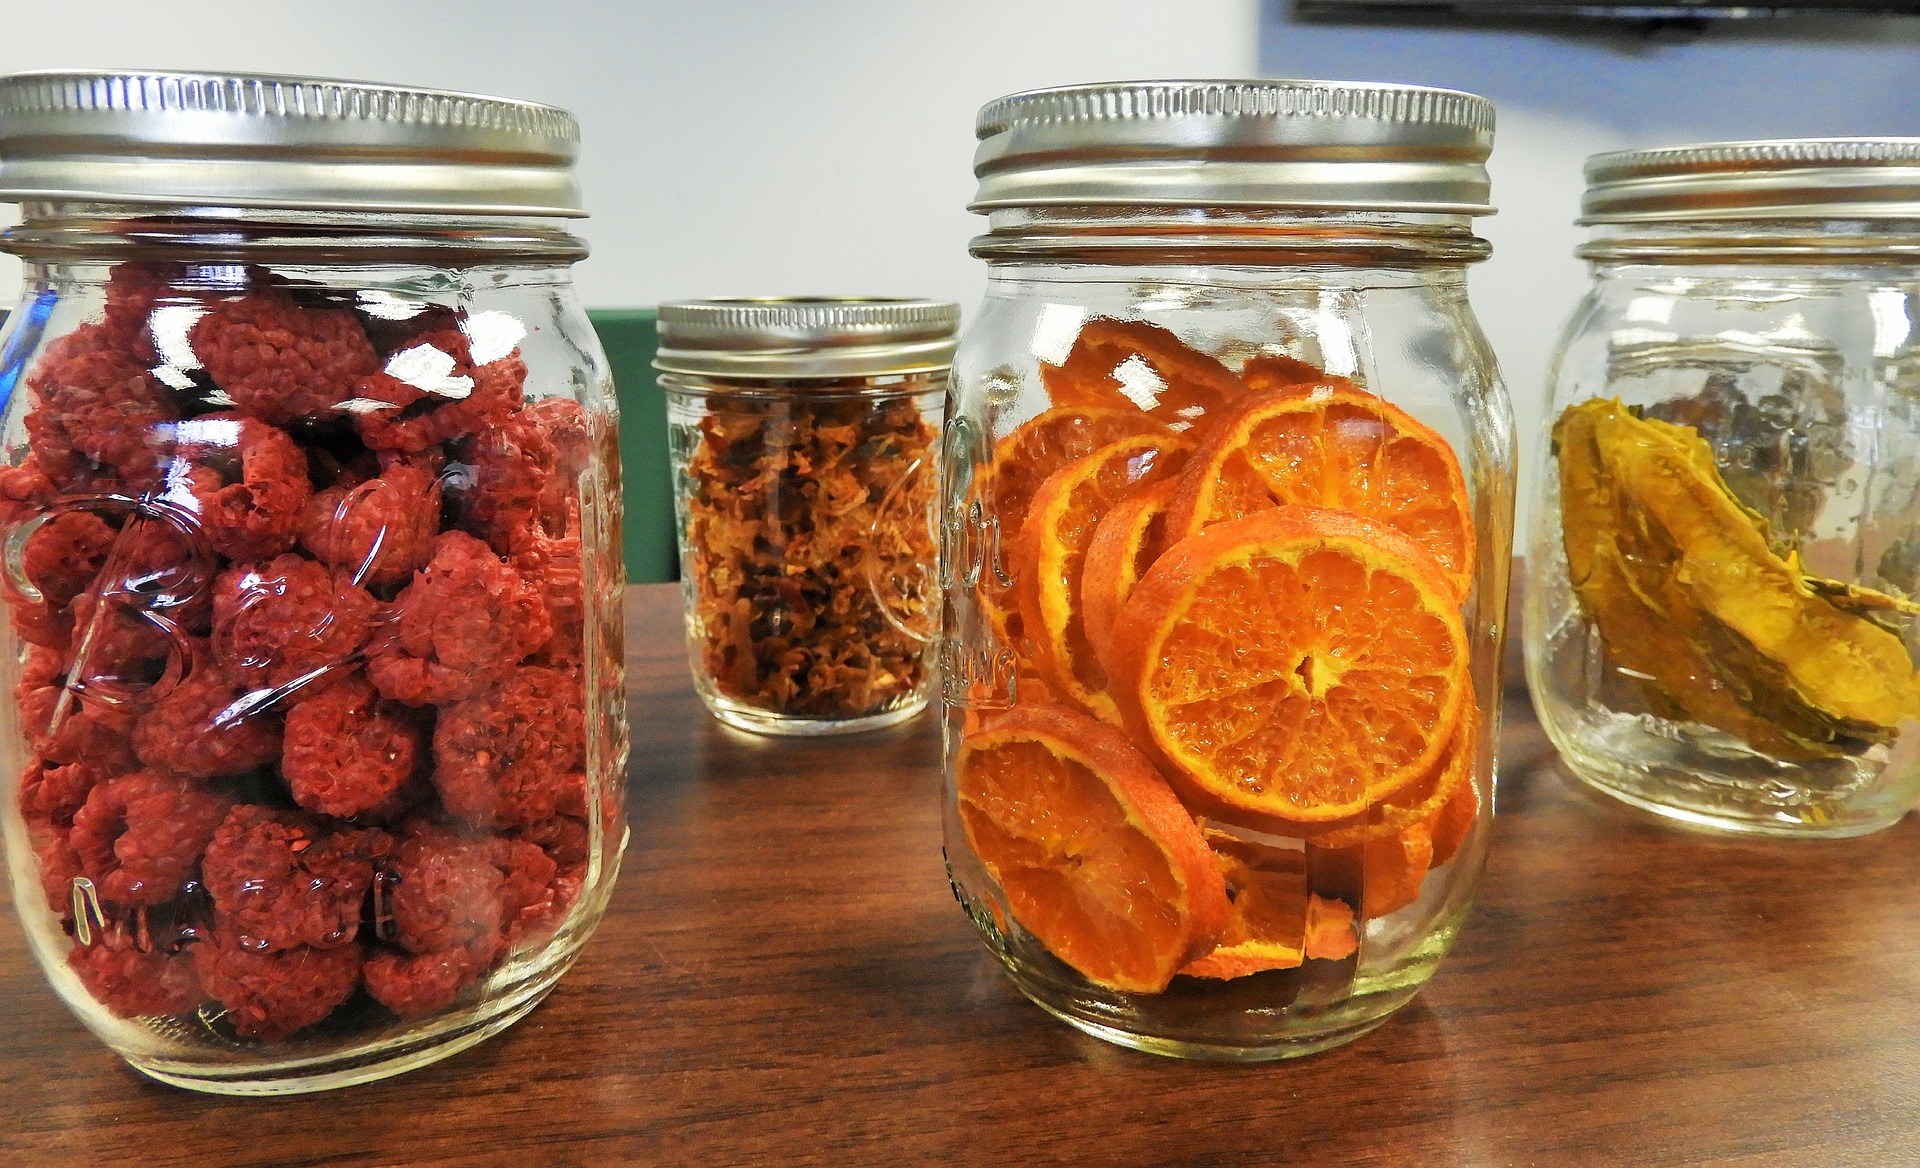 Jars of dried fruit